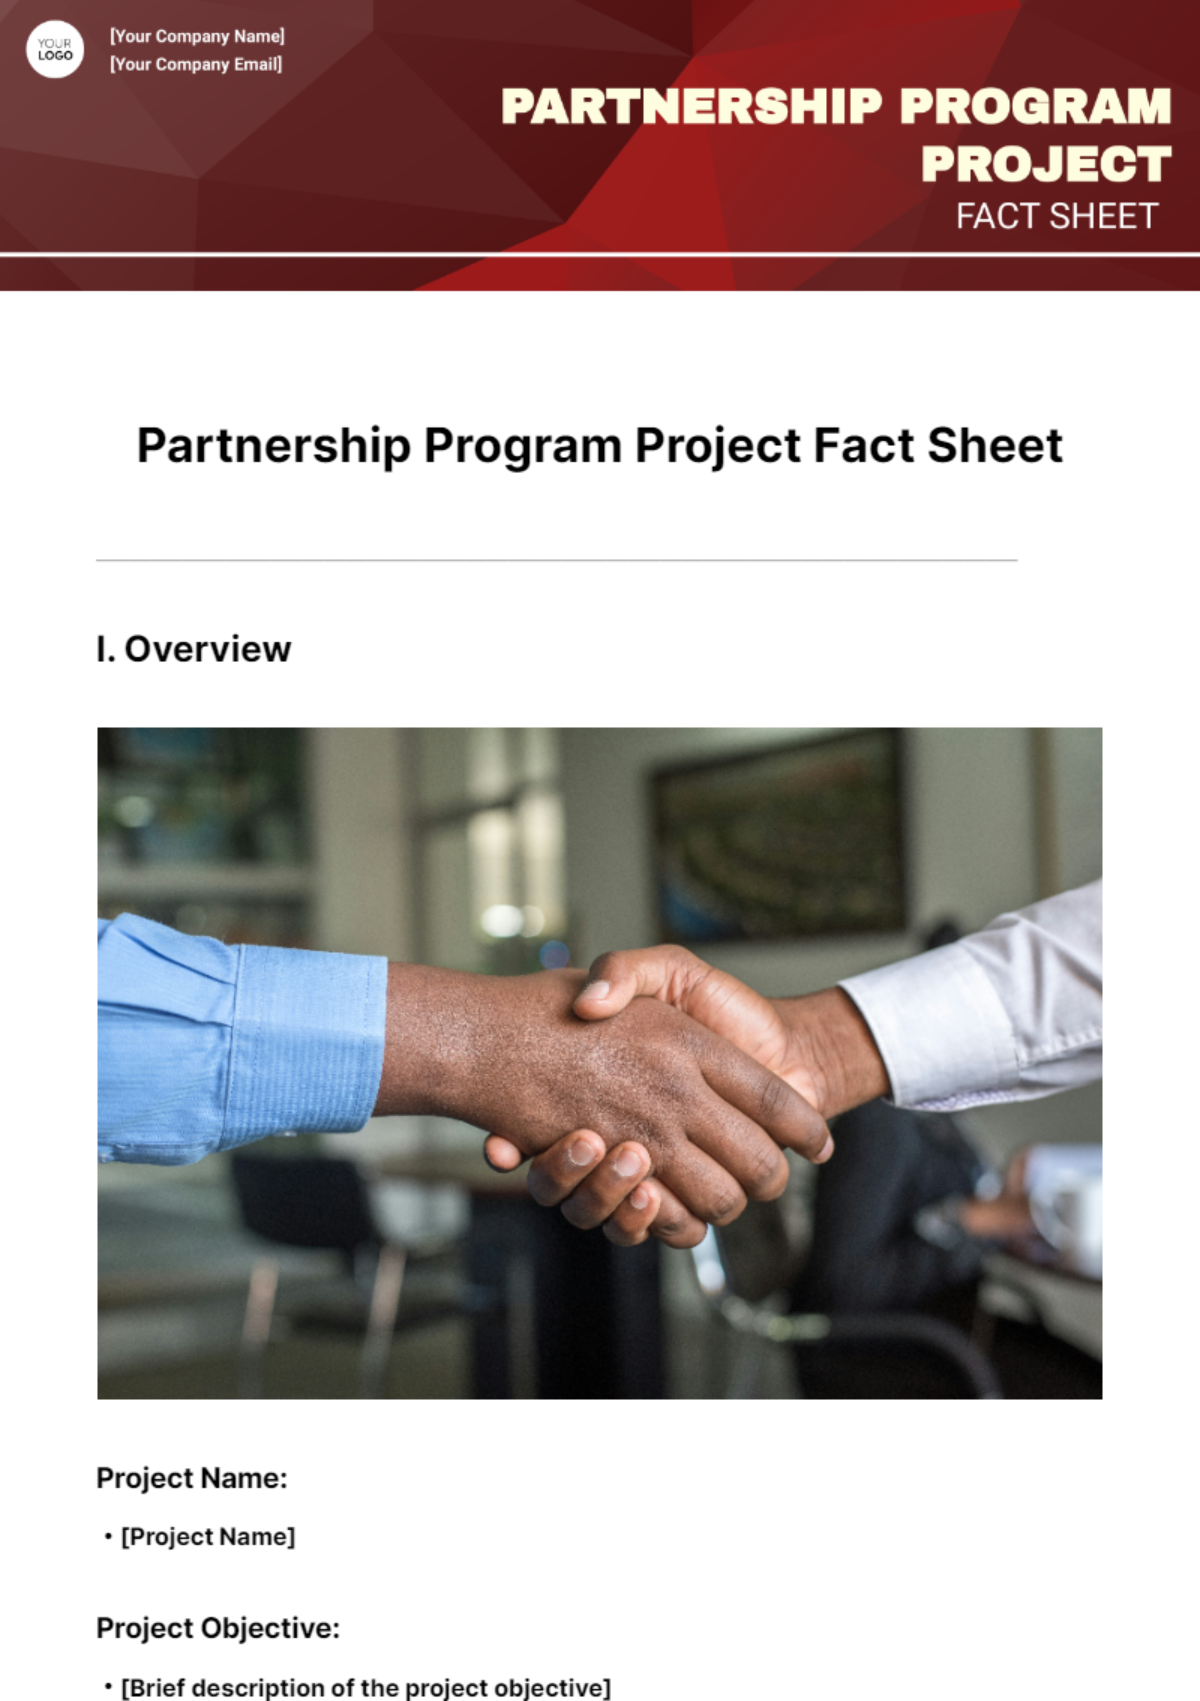 Partnership Program Project Fact Sheet Template